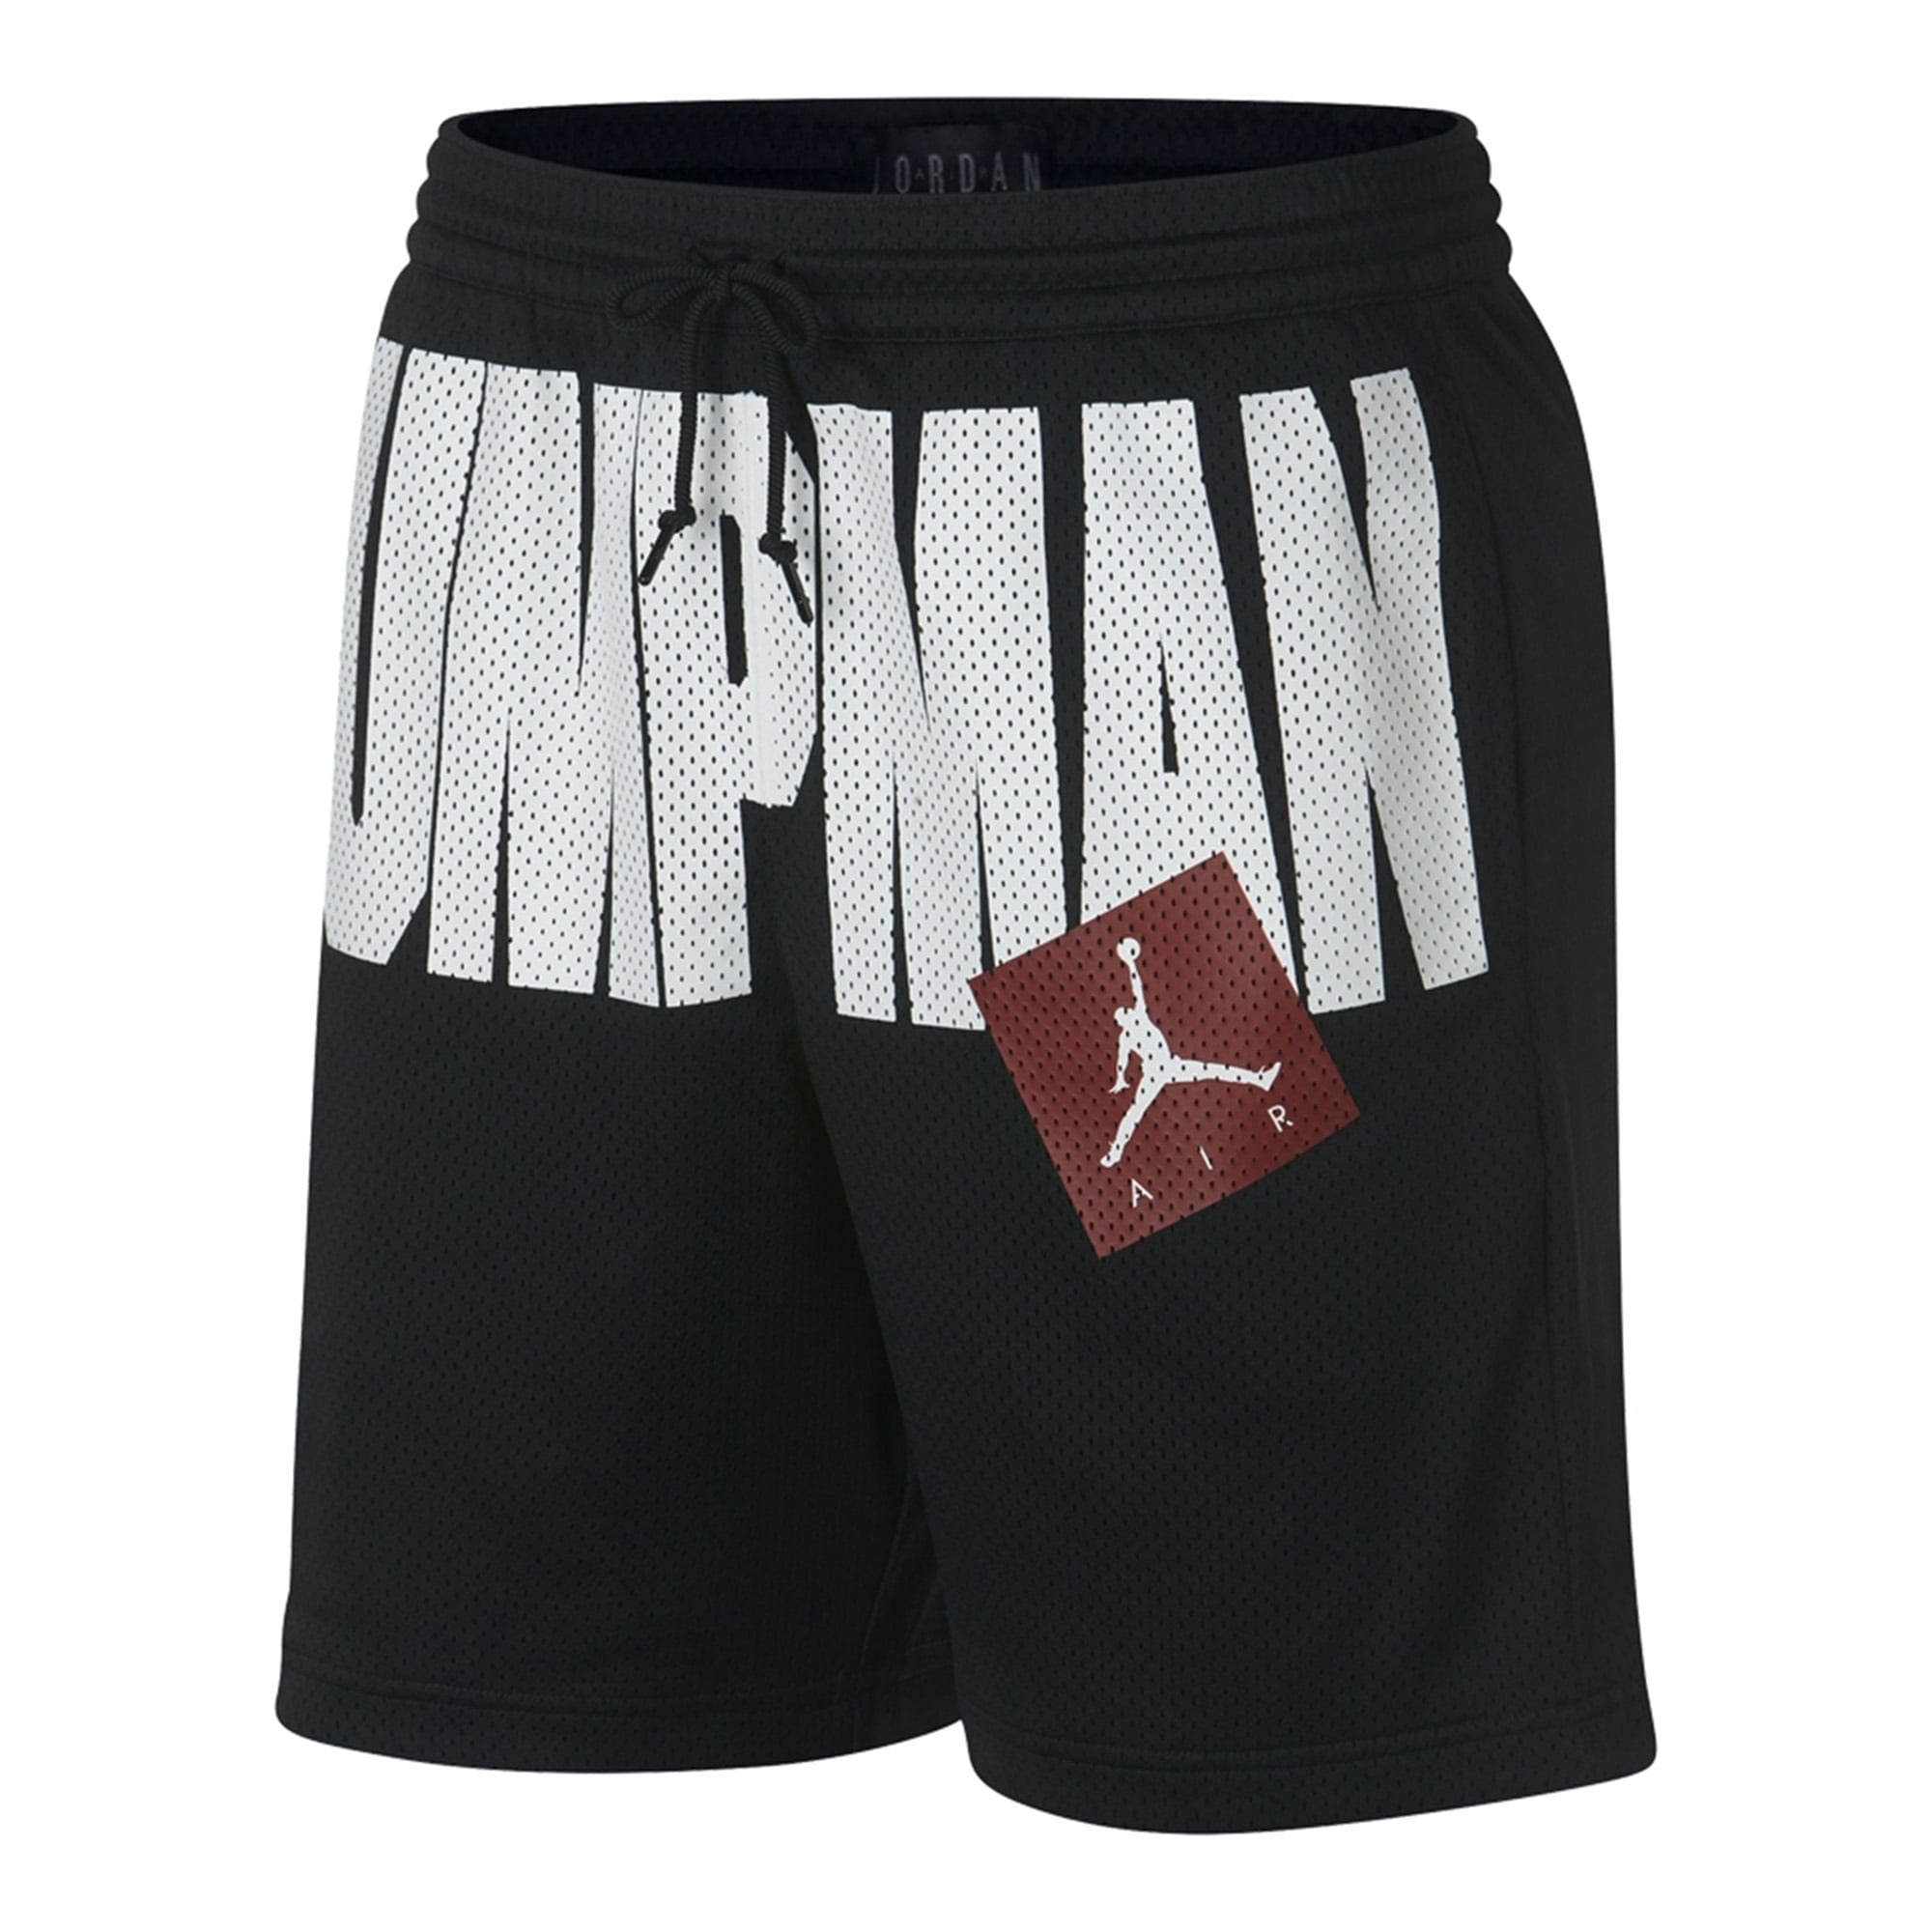 Jordan Jumpman Mesh Basketball Men's Shorts Black aa4607-010 - Walmart.com